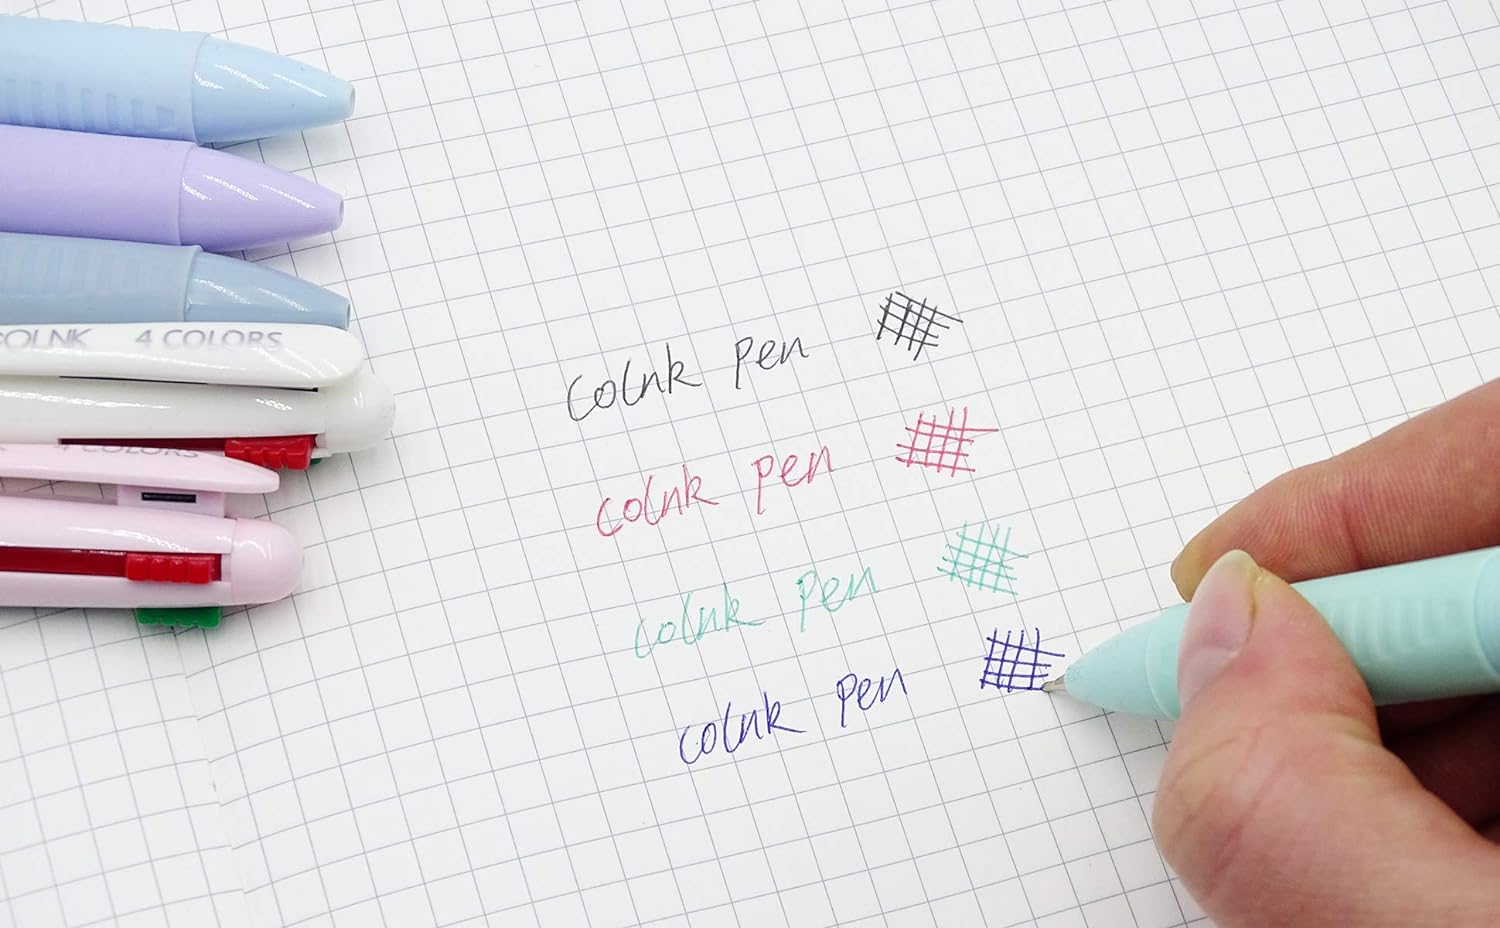 COLNK 4IN1 Multicolor Ballpoint Pen 0.5mm 6 Count